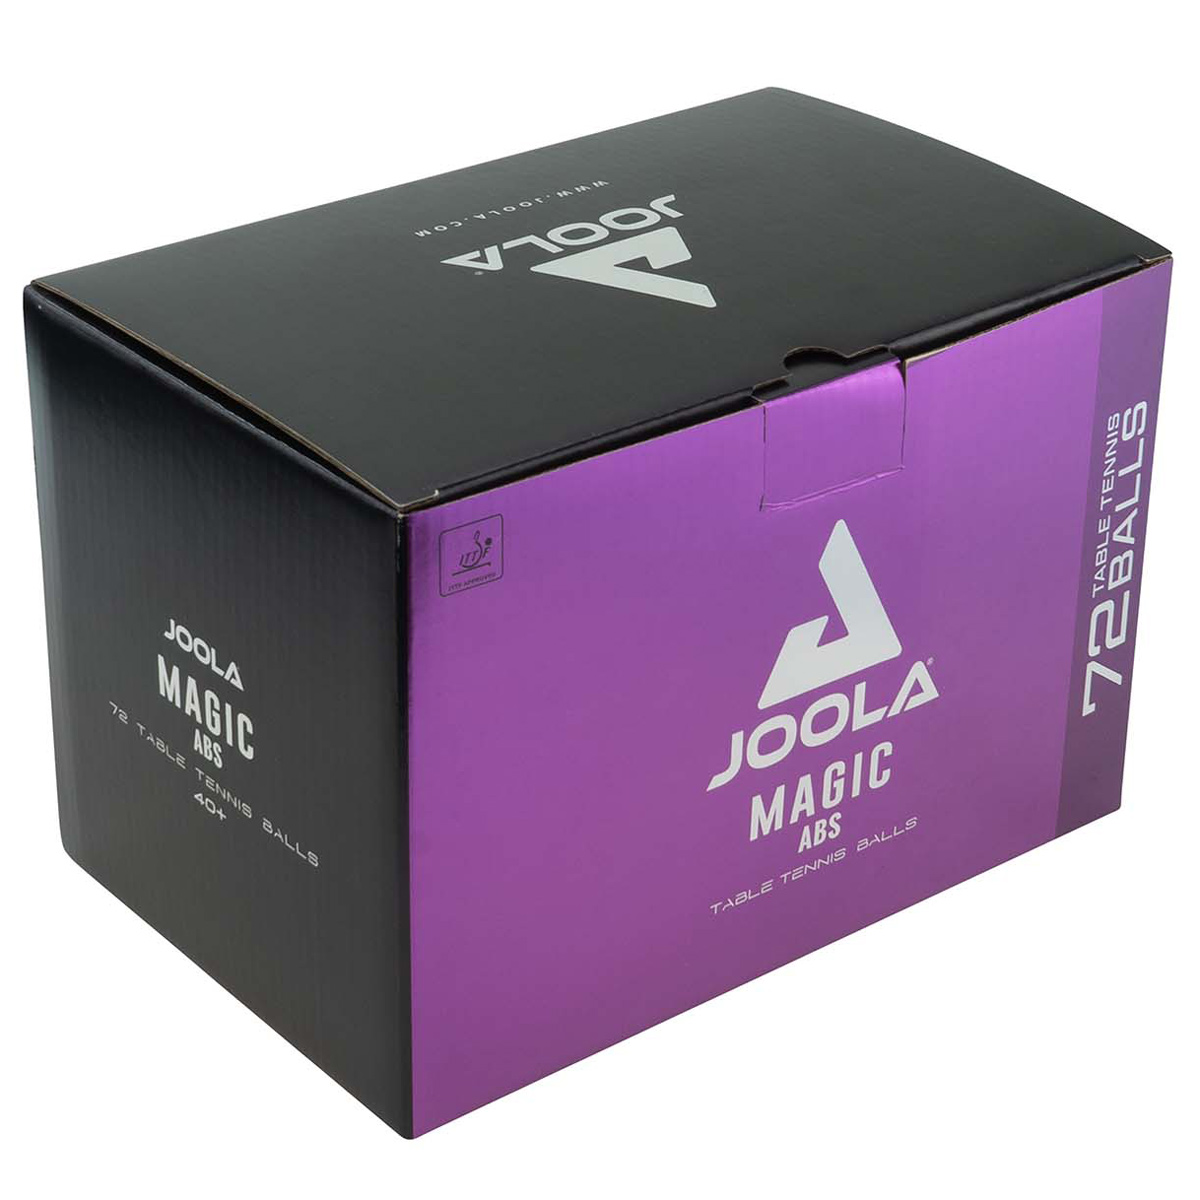 JOOLA Trainingsball Magic ABS 40+ 72er weiß